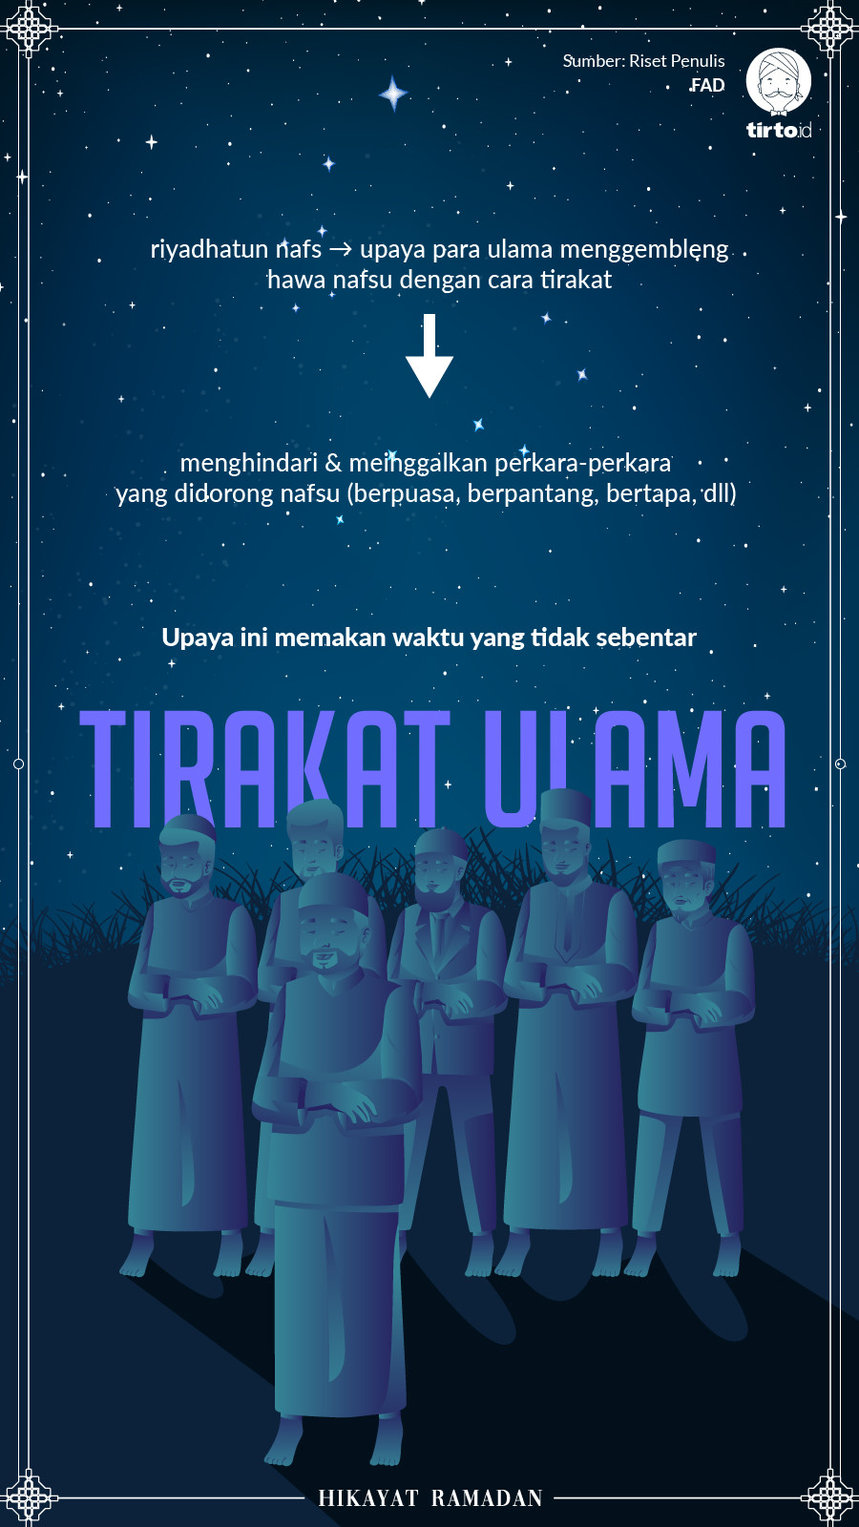 Infografik Hikayat ramadhan tirakat ulama